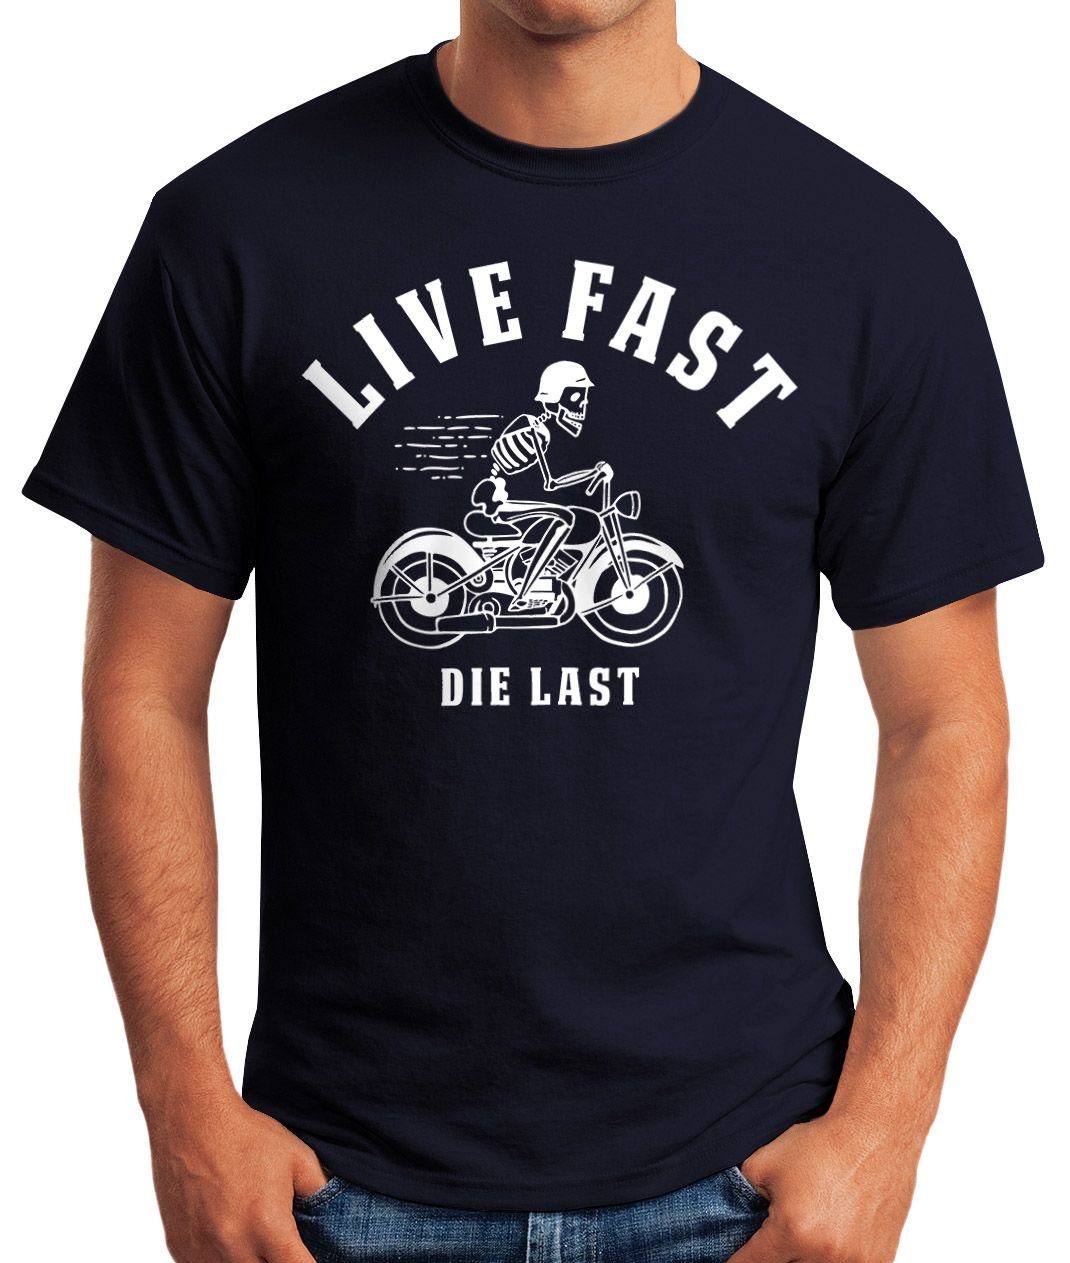 MoonWorks Spruch Moonworks® Fun-Shirt last navy T-Shirt mit Live Fast Print Herren Die Print-Shirt Fun